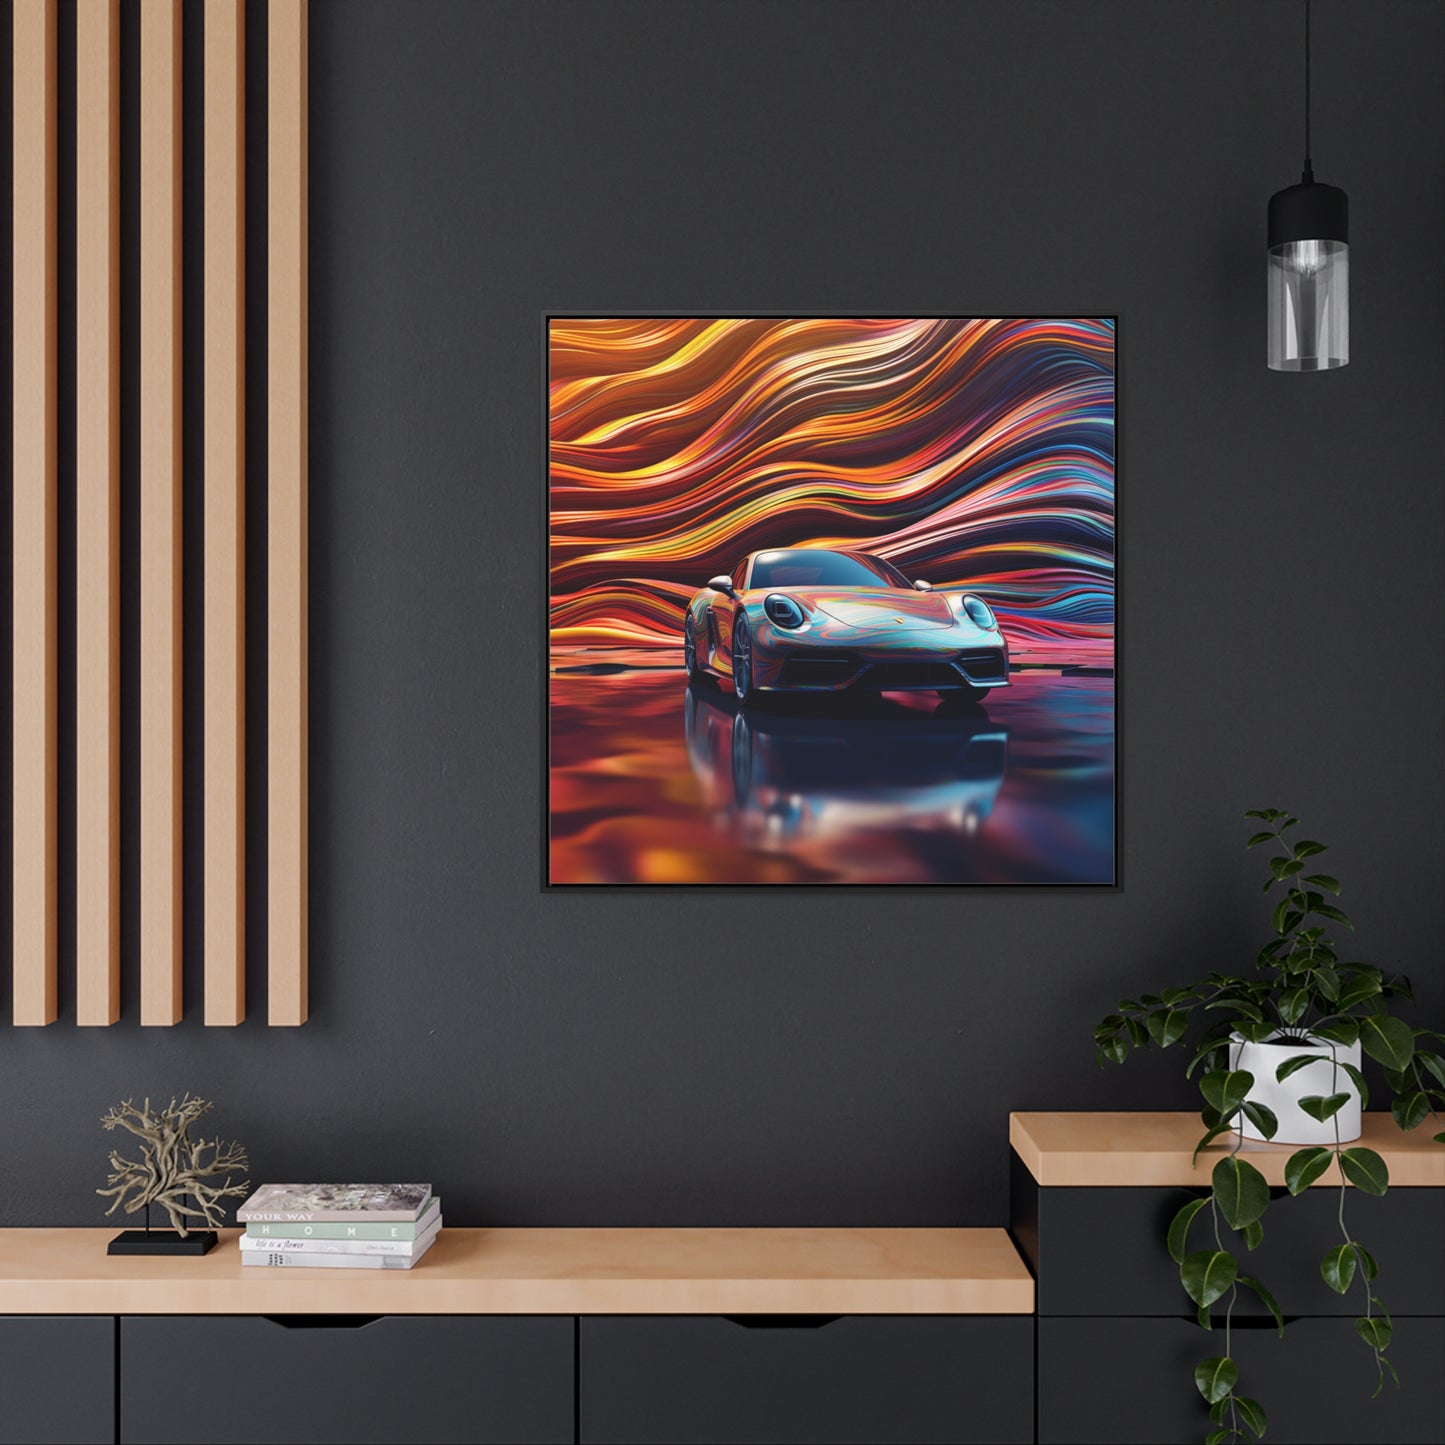 Gallery Canvas Wraps, Square Frame Porsche Water Fusion 1